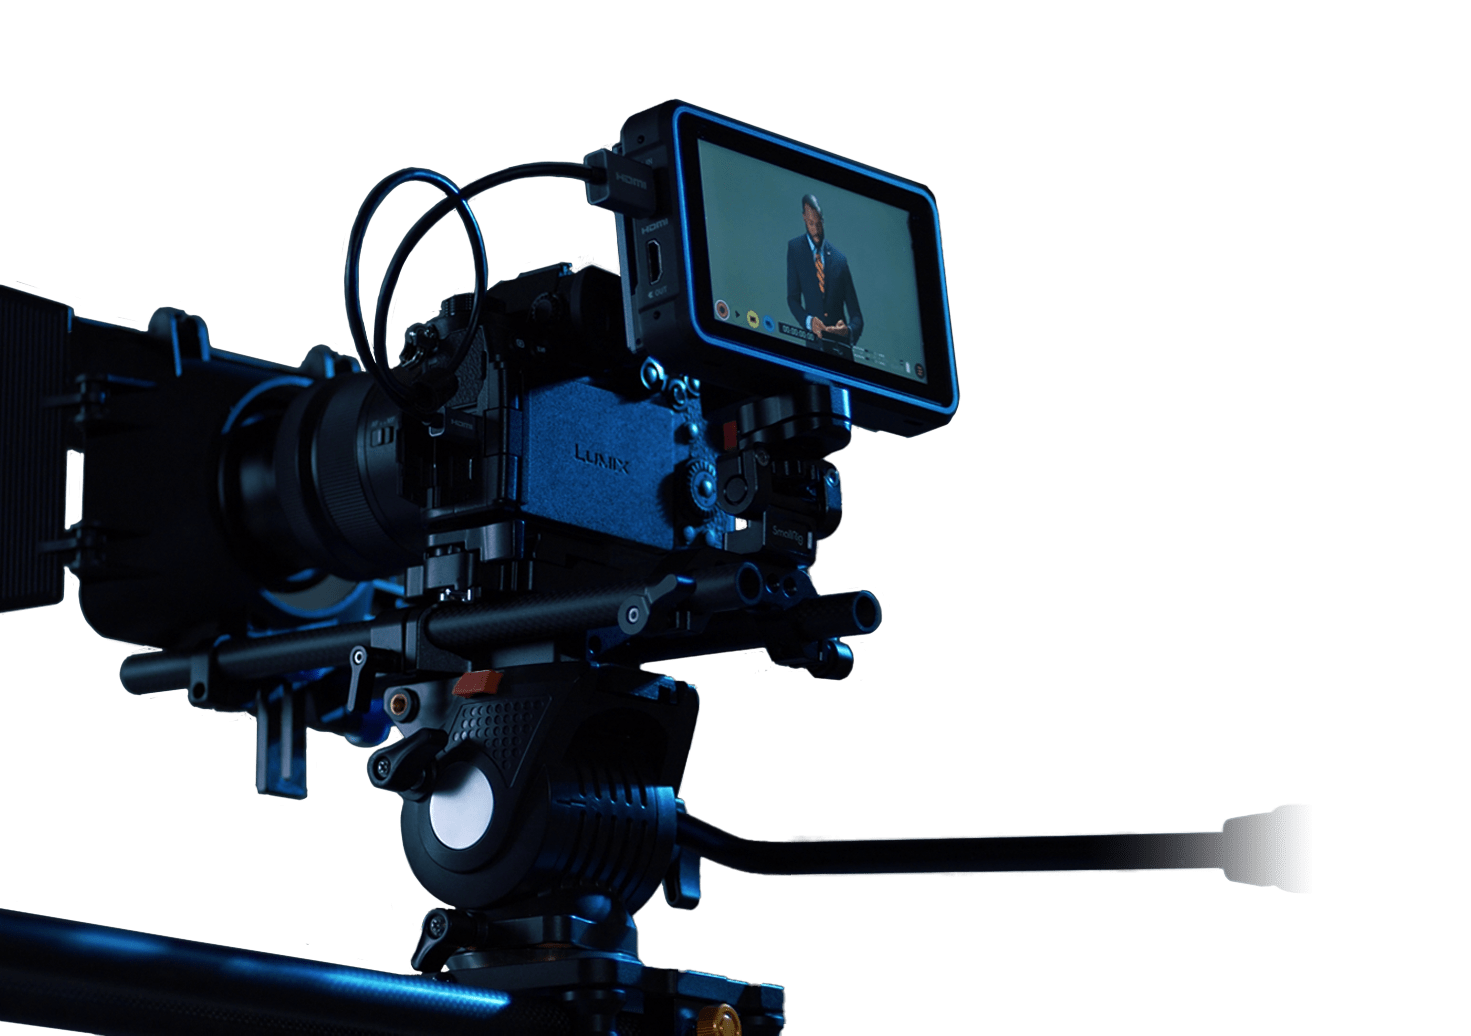 Professional Panasonic Lumix camera filming a scene